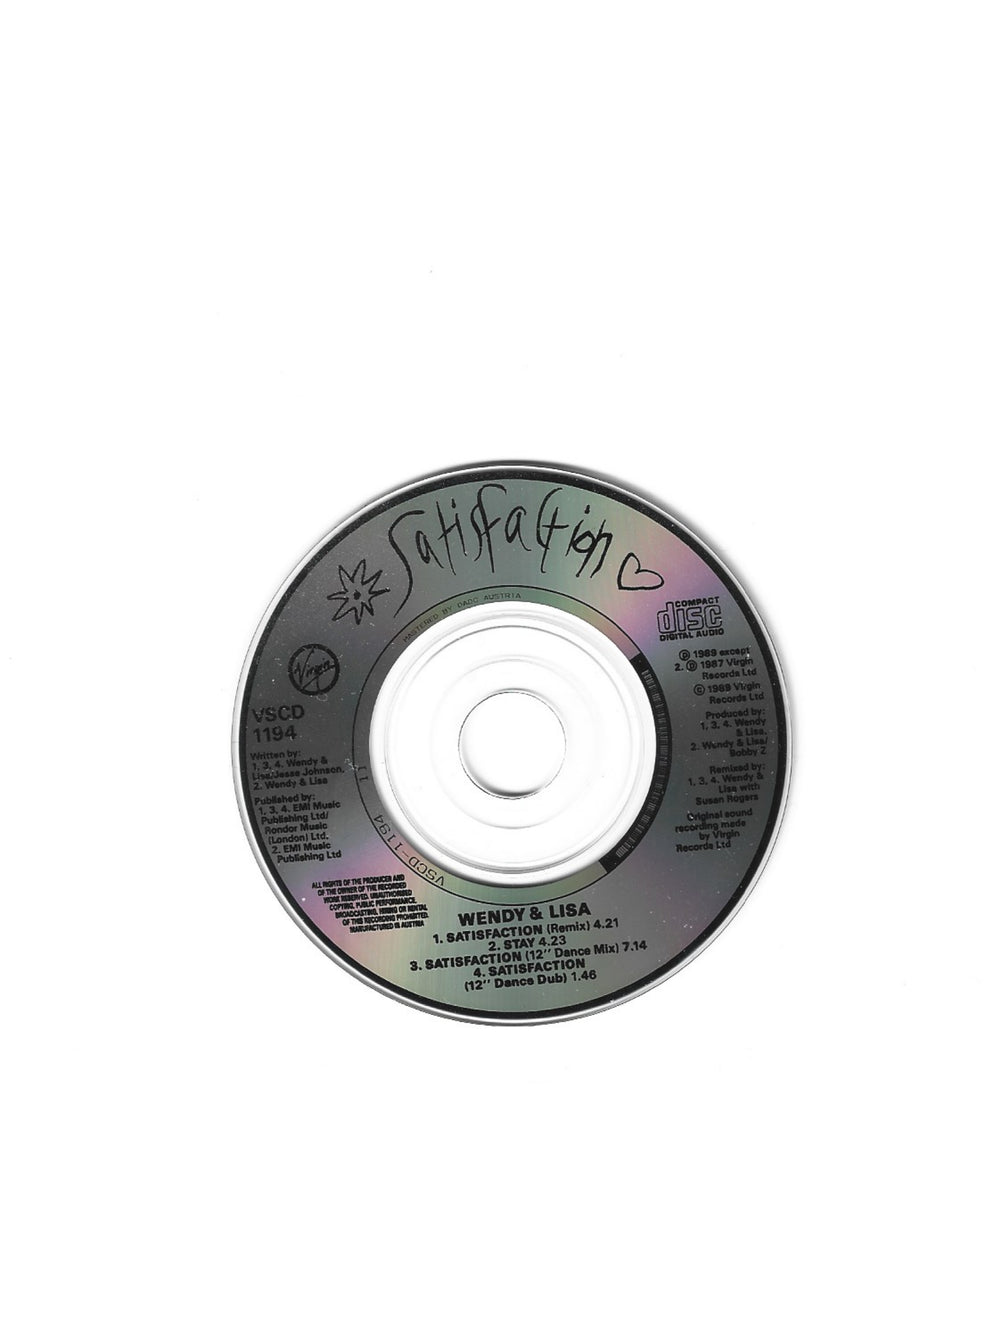 Prince – Wendy & Lisa Satisfaction UK CD Single 3 Inch Remix / Dance Mix 4 Tracks